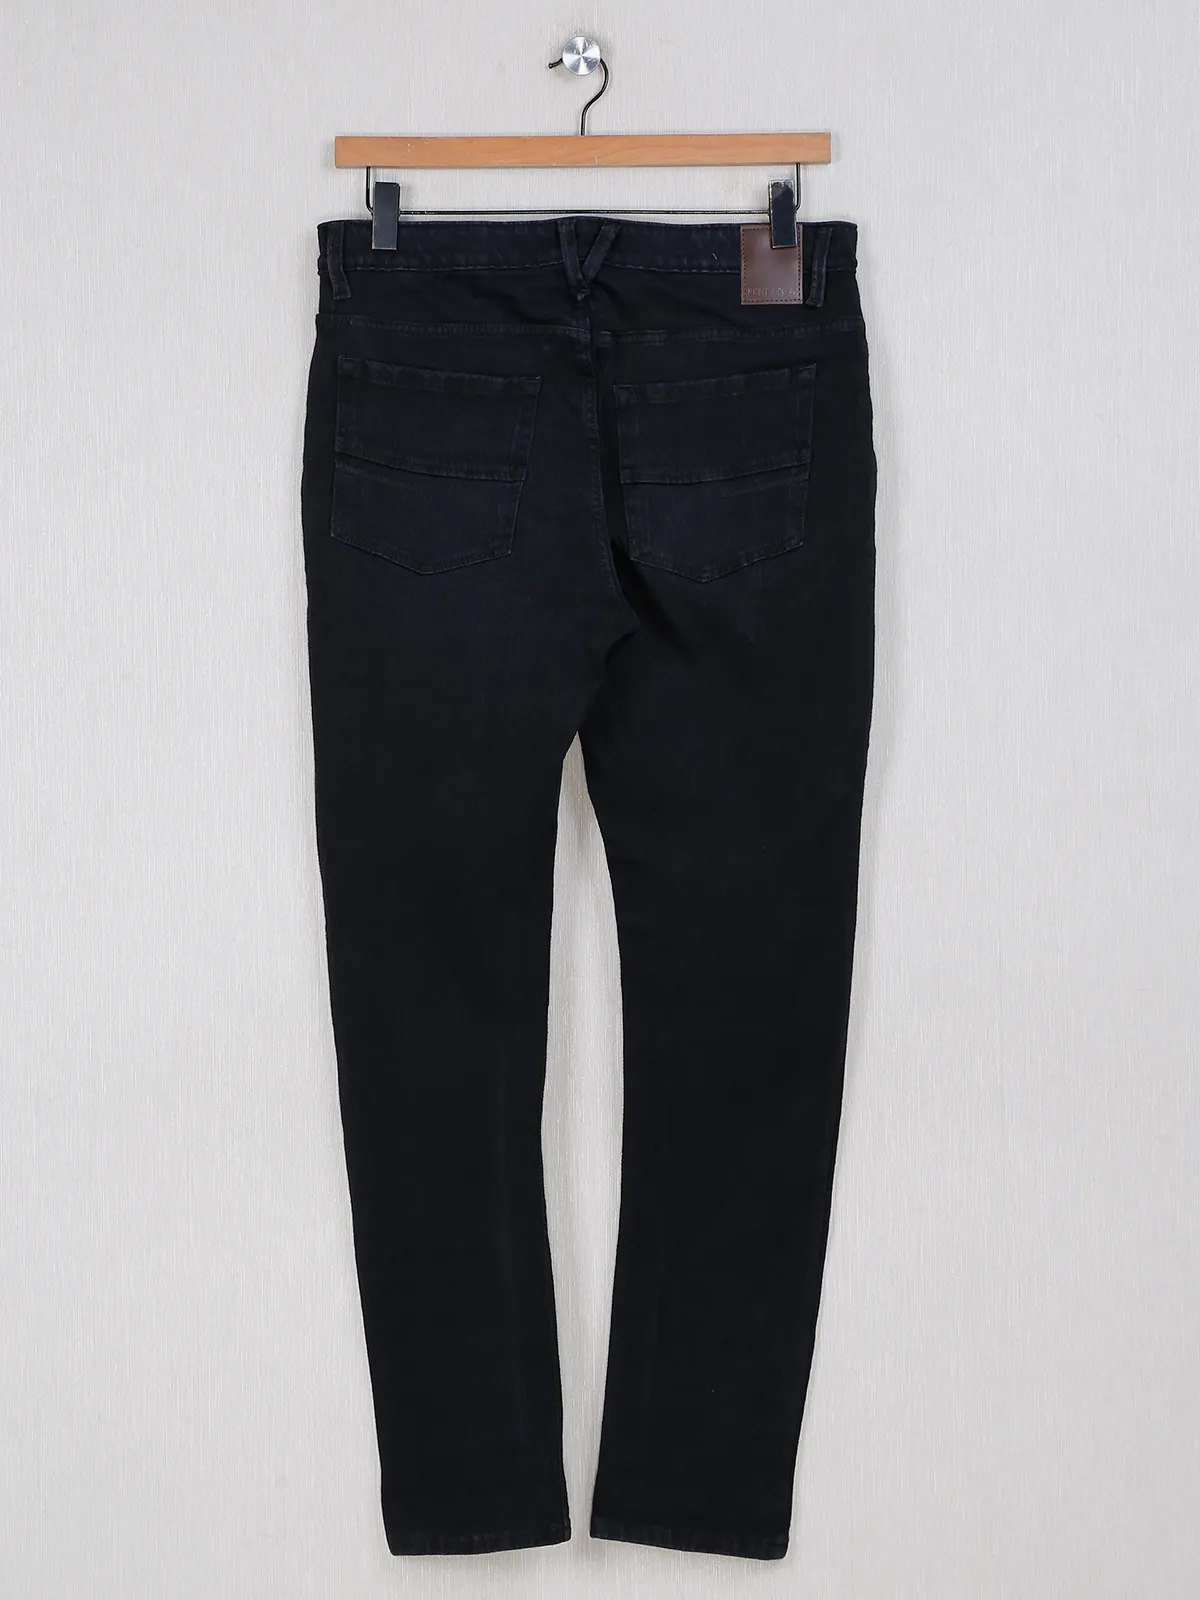 UCB black denim solid jeans